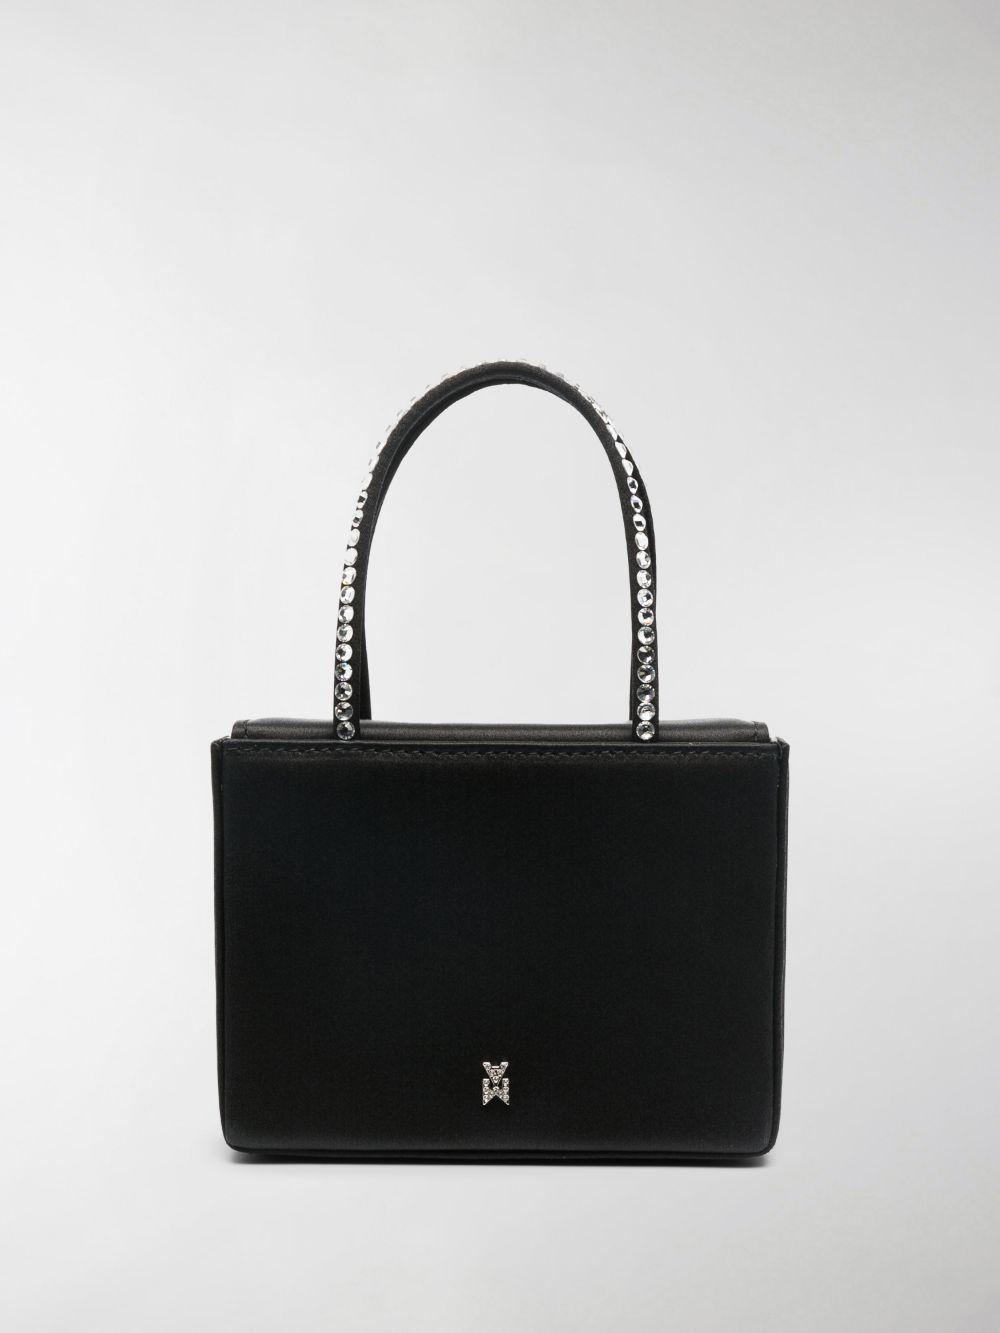 AMINA MUADDI Leather Crystal-embellished Tote Bag in Black - Lyst